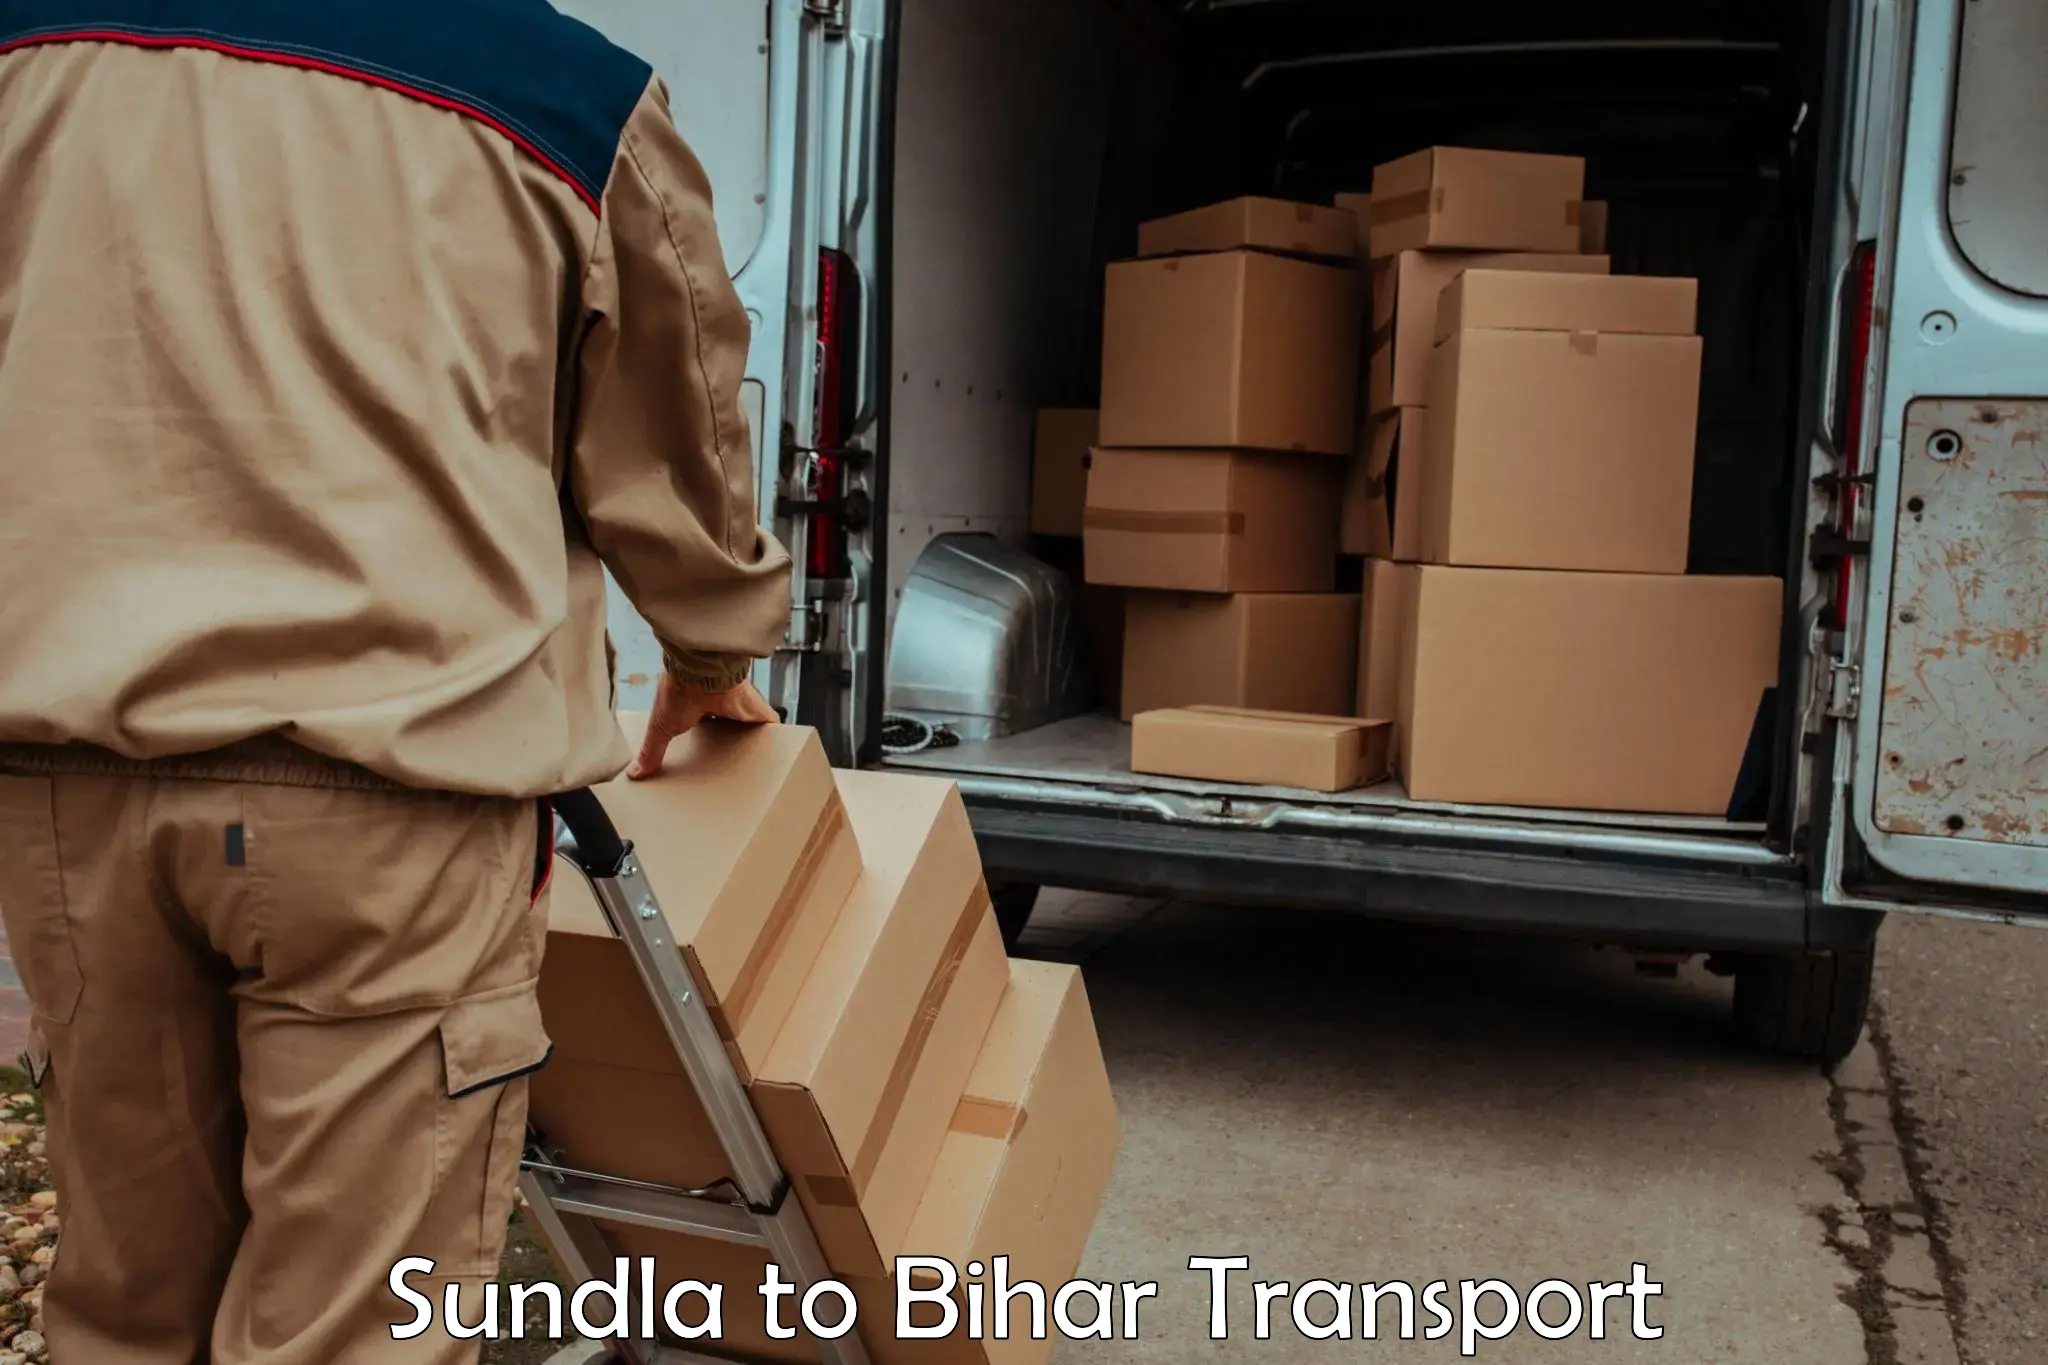 Commercial transport service Sundla to Dhaka